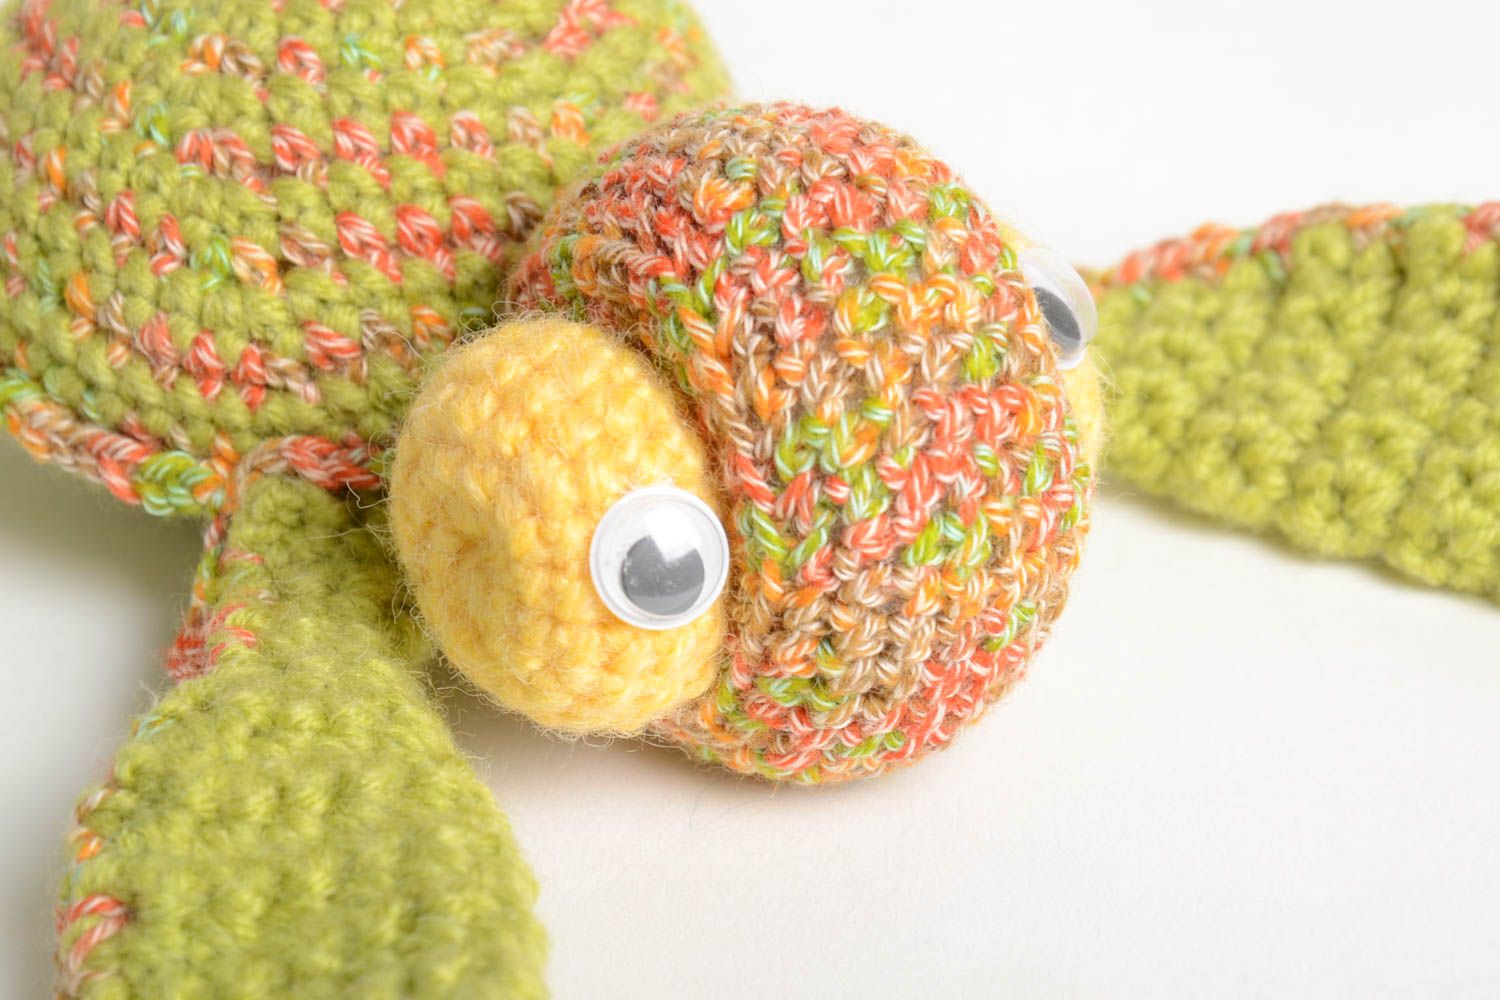 Unusual handmade crochet soft toy stuffed toy turtle room decor ideas photo 3